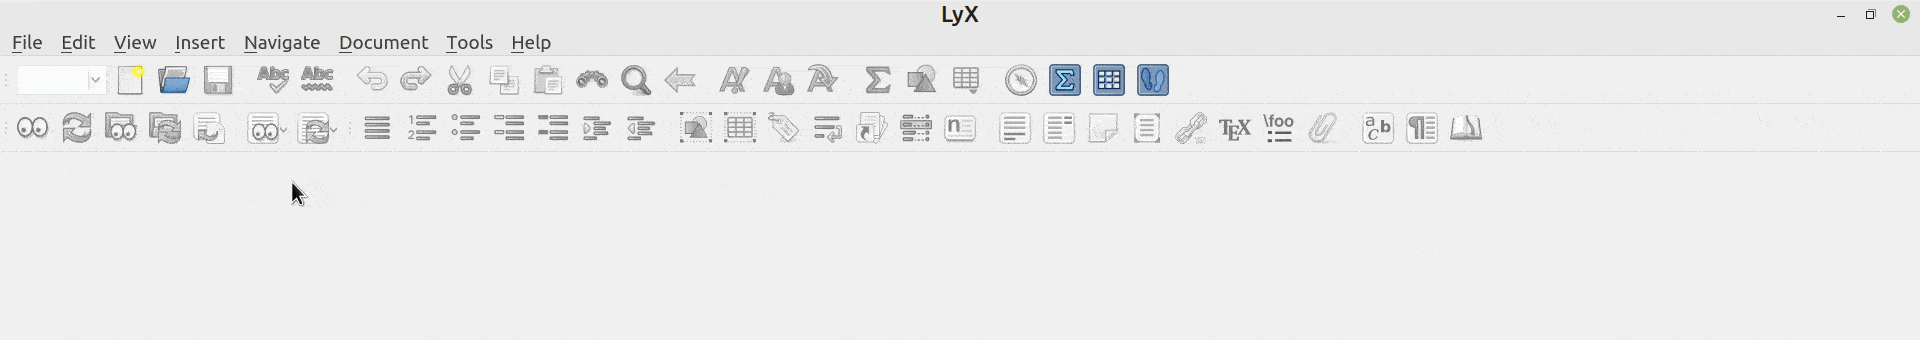 LyX new documents